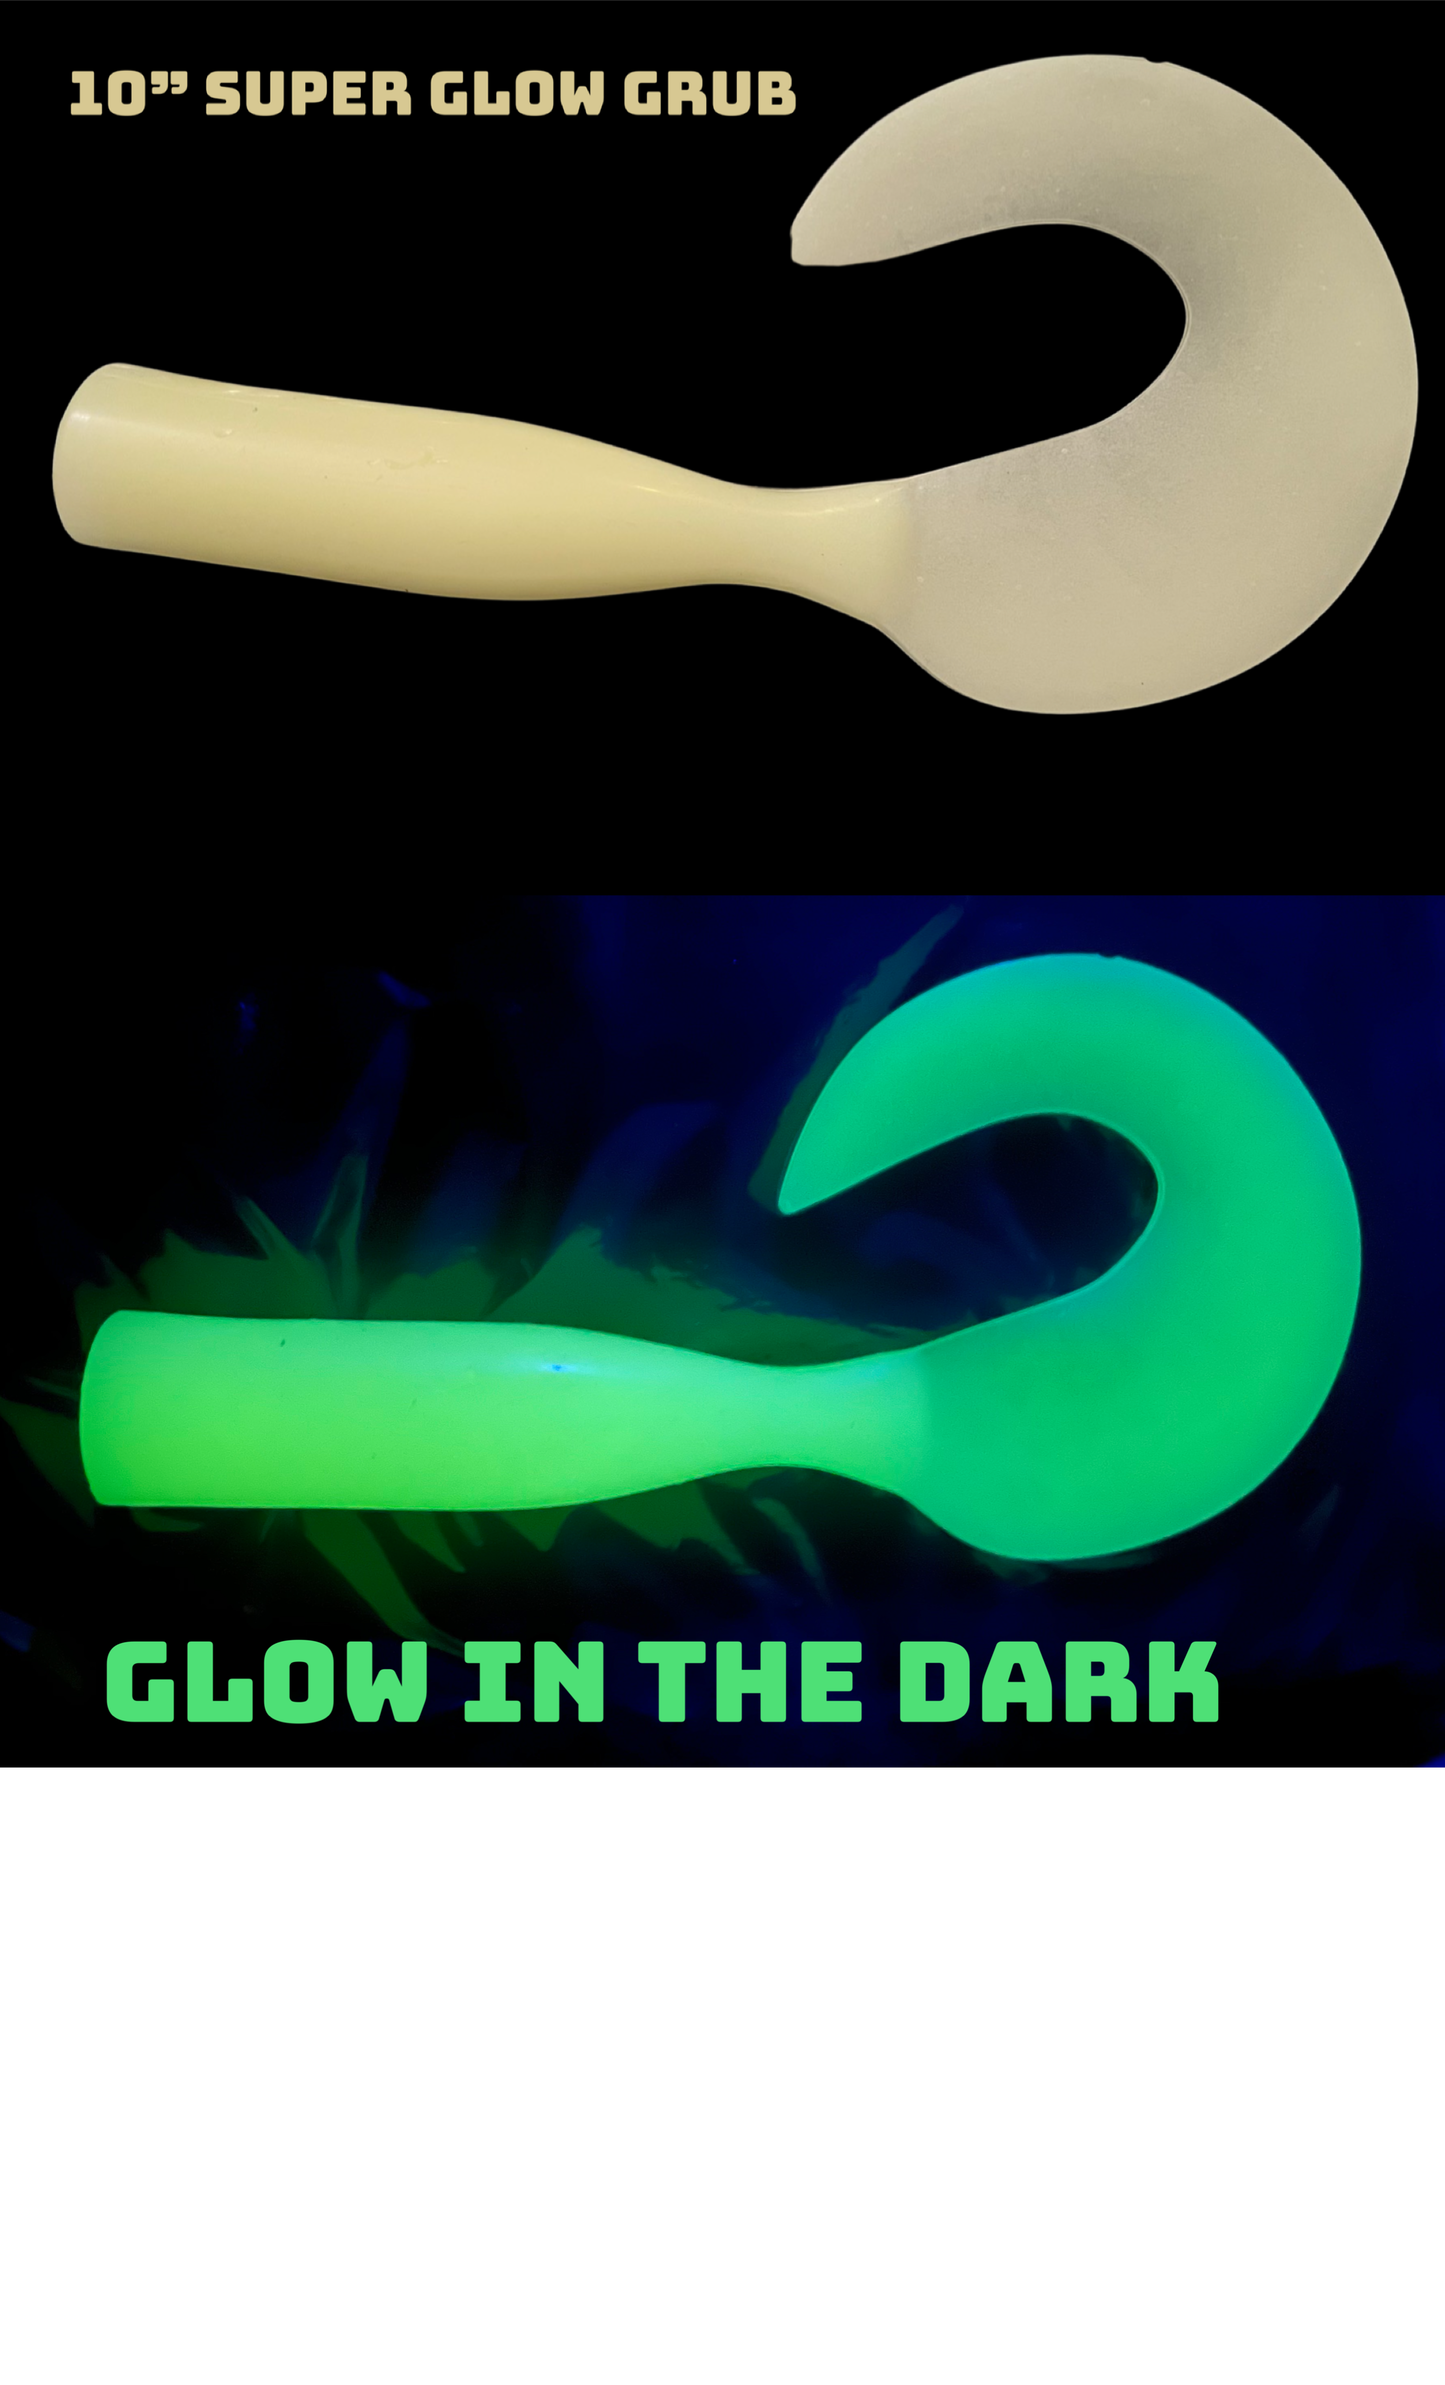 10” Super Glow Grub